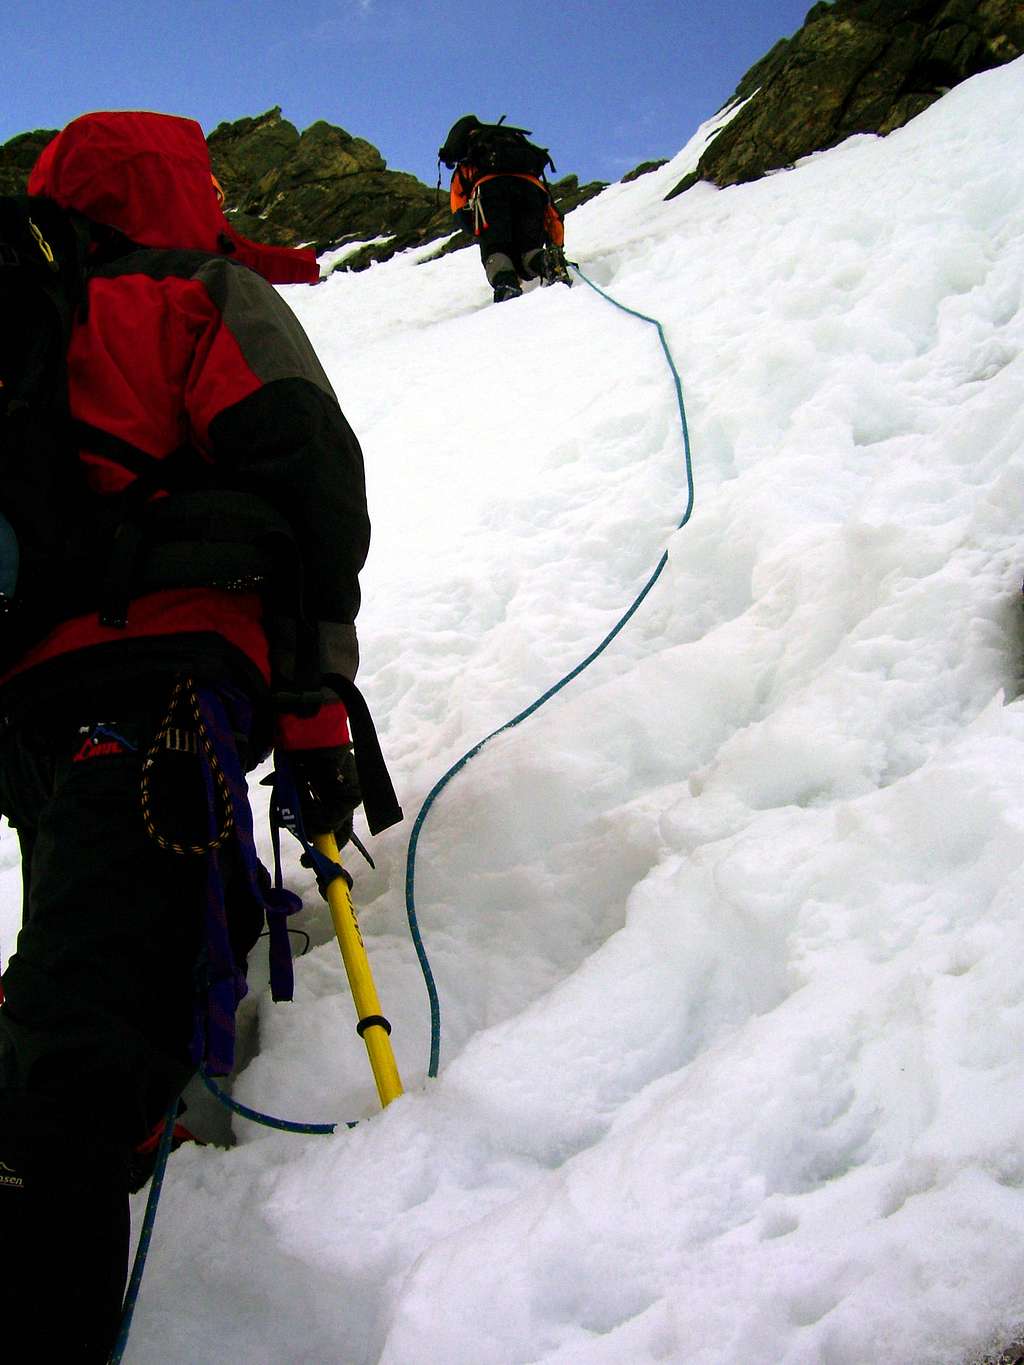 Rimpfischwänge snow slope climbing